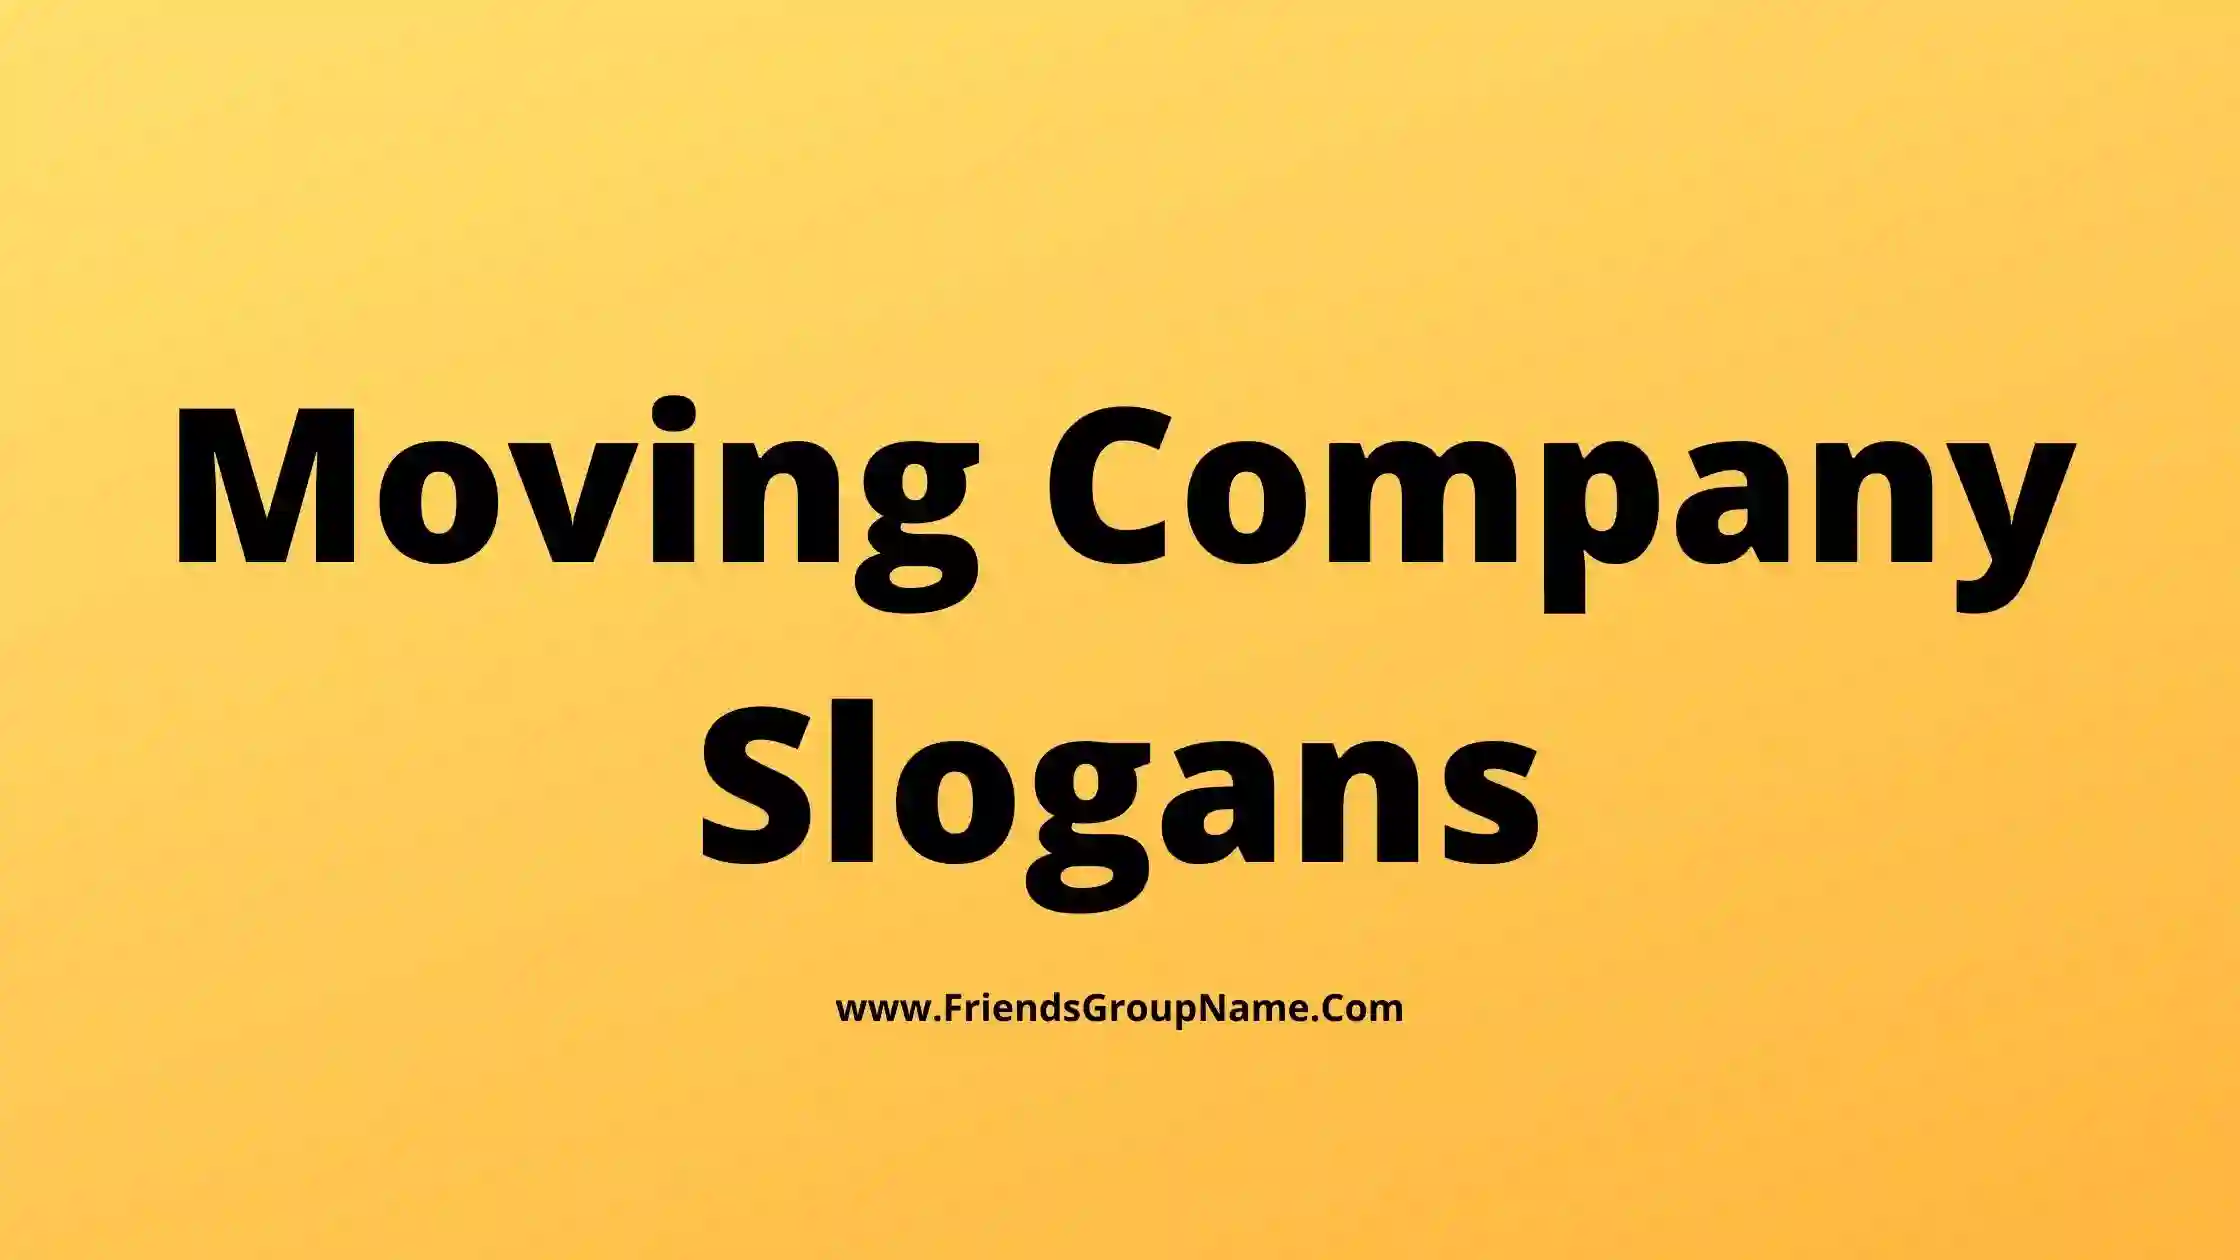 Moving Company Slogans